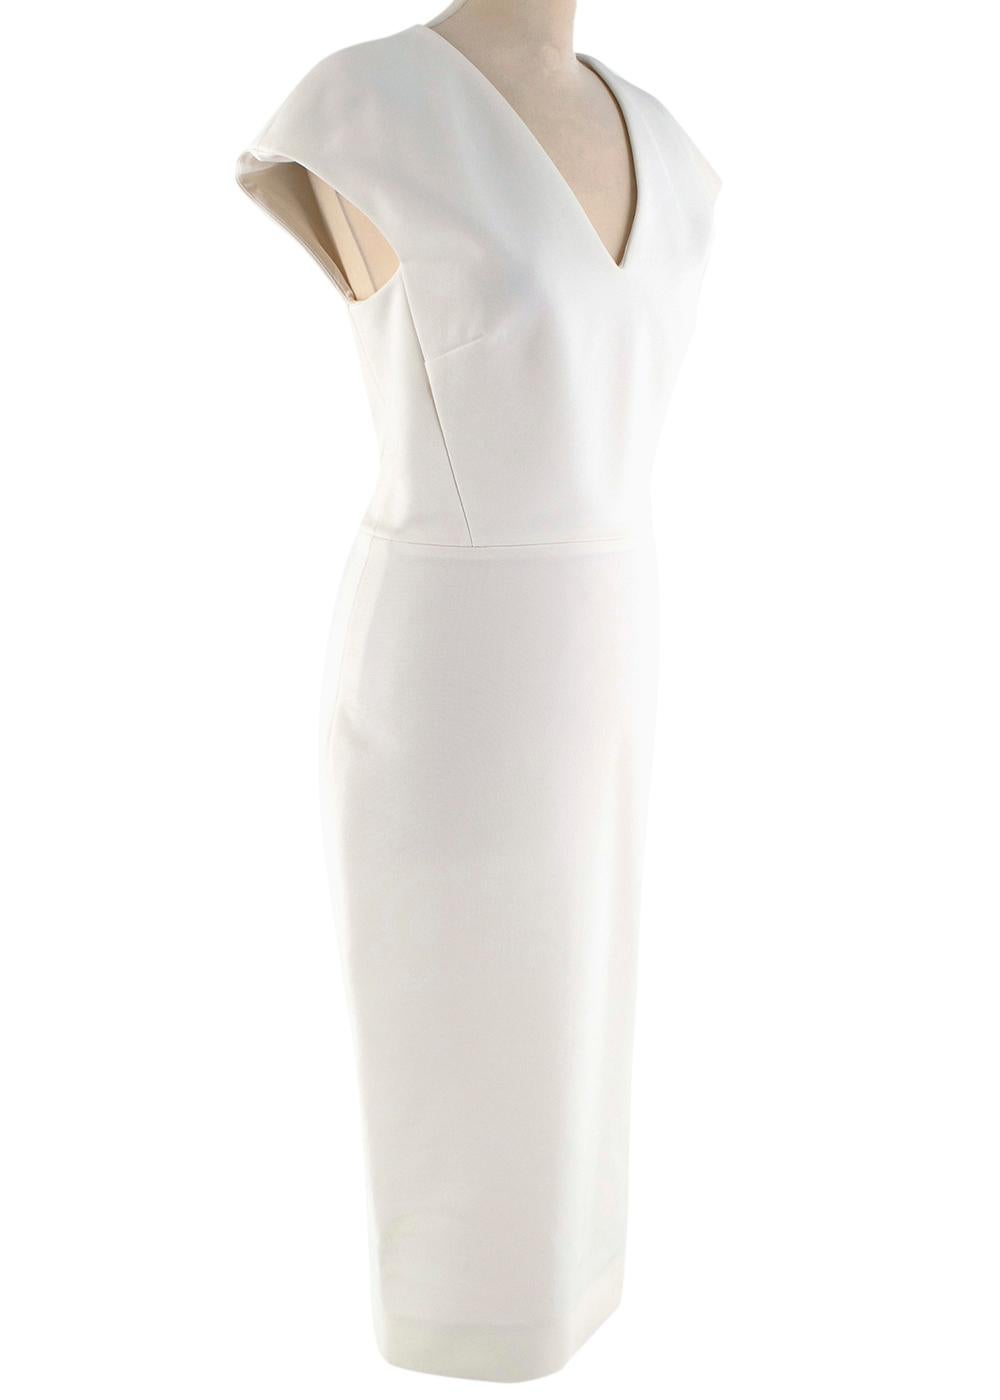 Victoria Beckham Off-White V Neck Fitted Dress

- Mid weight 
- V neck cut
- Exposed back zip
- Sleeveless
- Fitted waist 
- Midi/knee length
- Reinforced hemline
- Darted detailing

Materials:
- 86% Viscose
- 10% Nylon
- 4% Elastane
Lining
- 100%